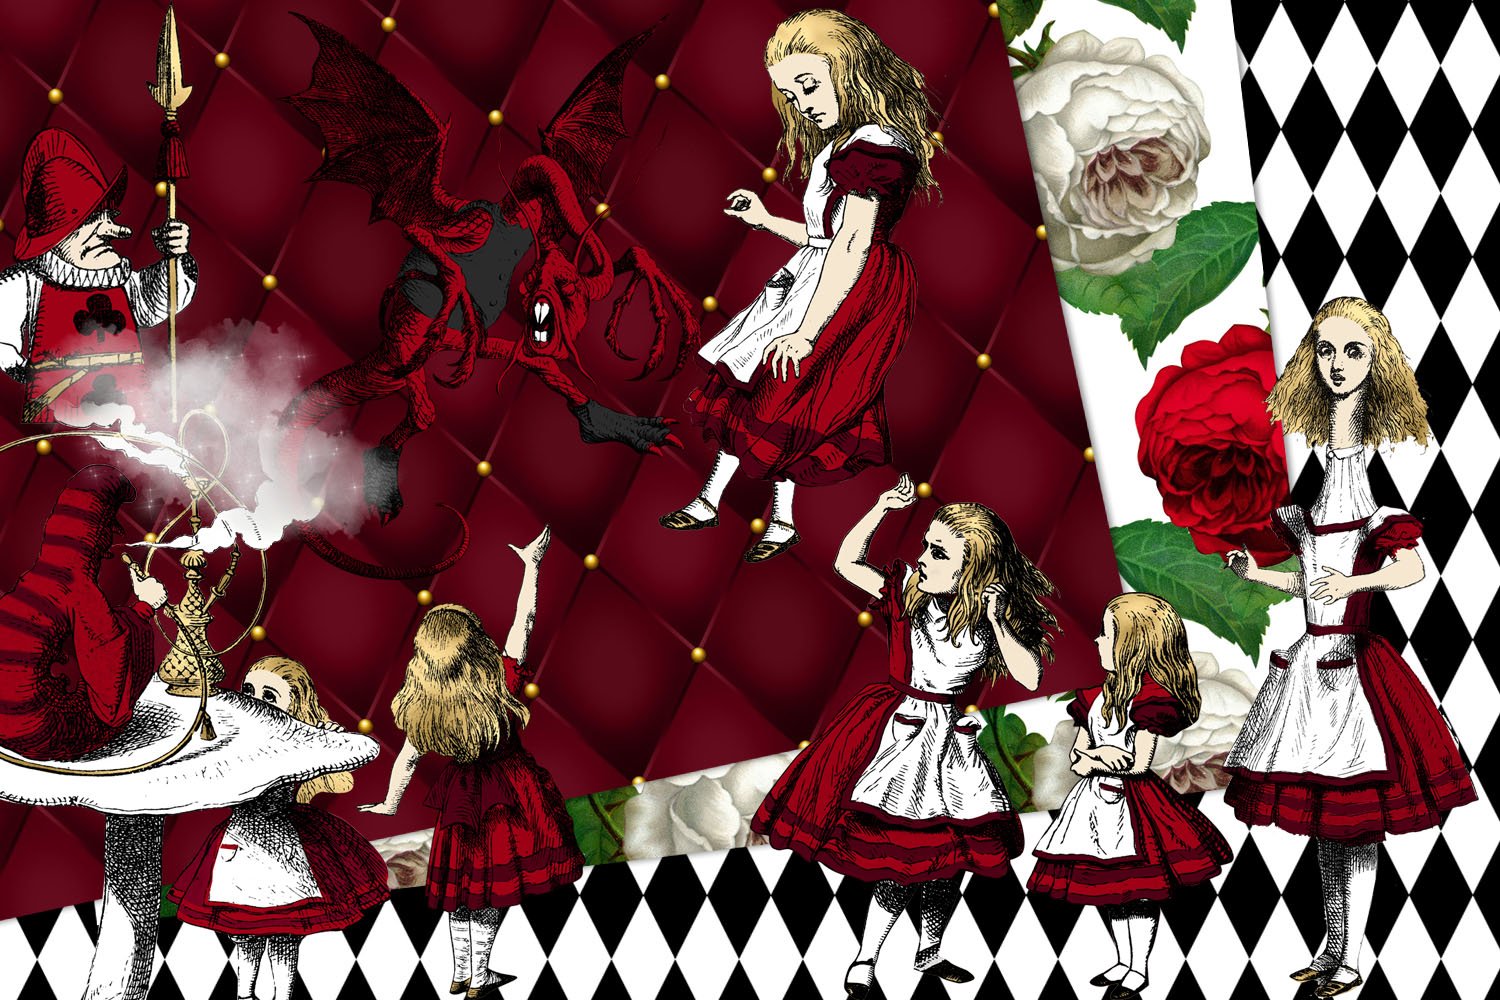 Image of Alice in Wonderland.